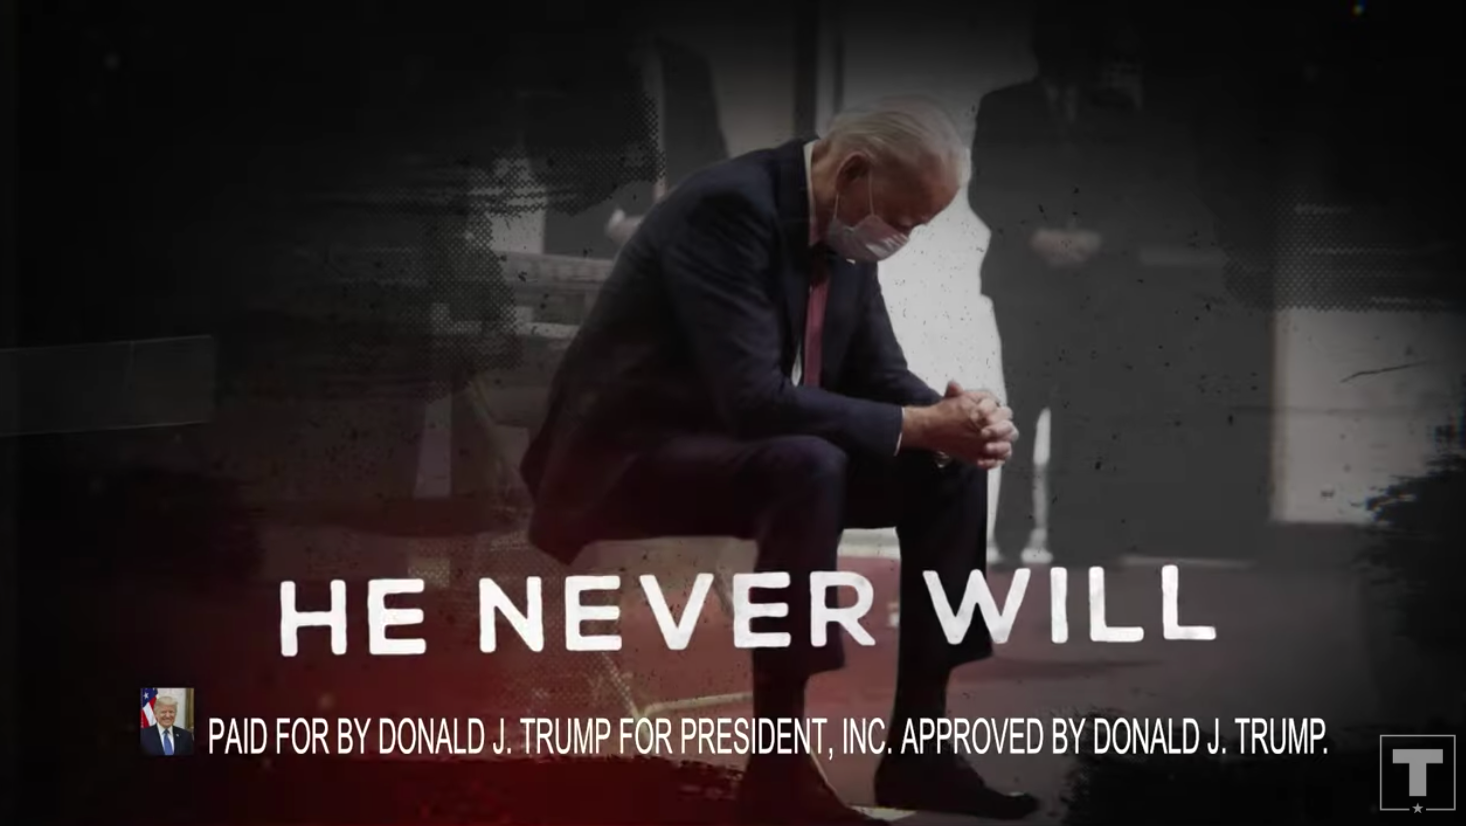 A new Trump ad mocks Joe Biden for praying